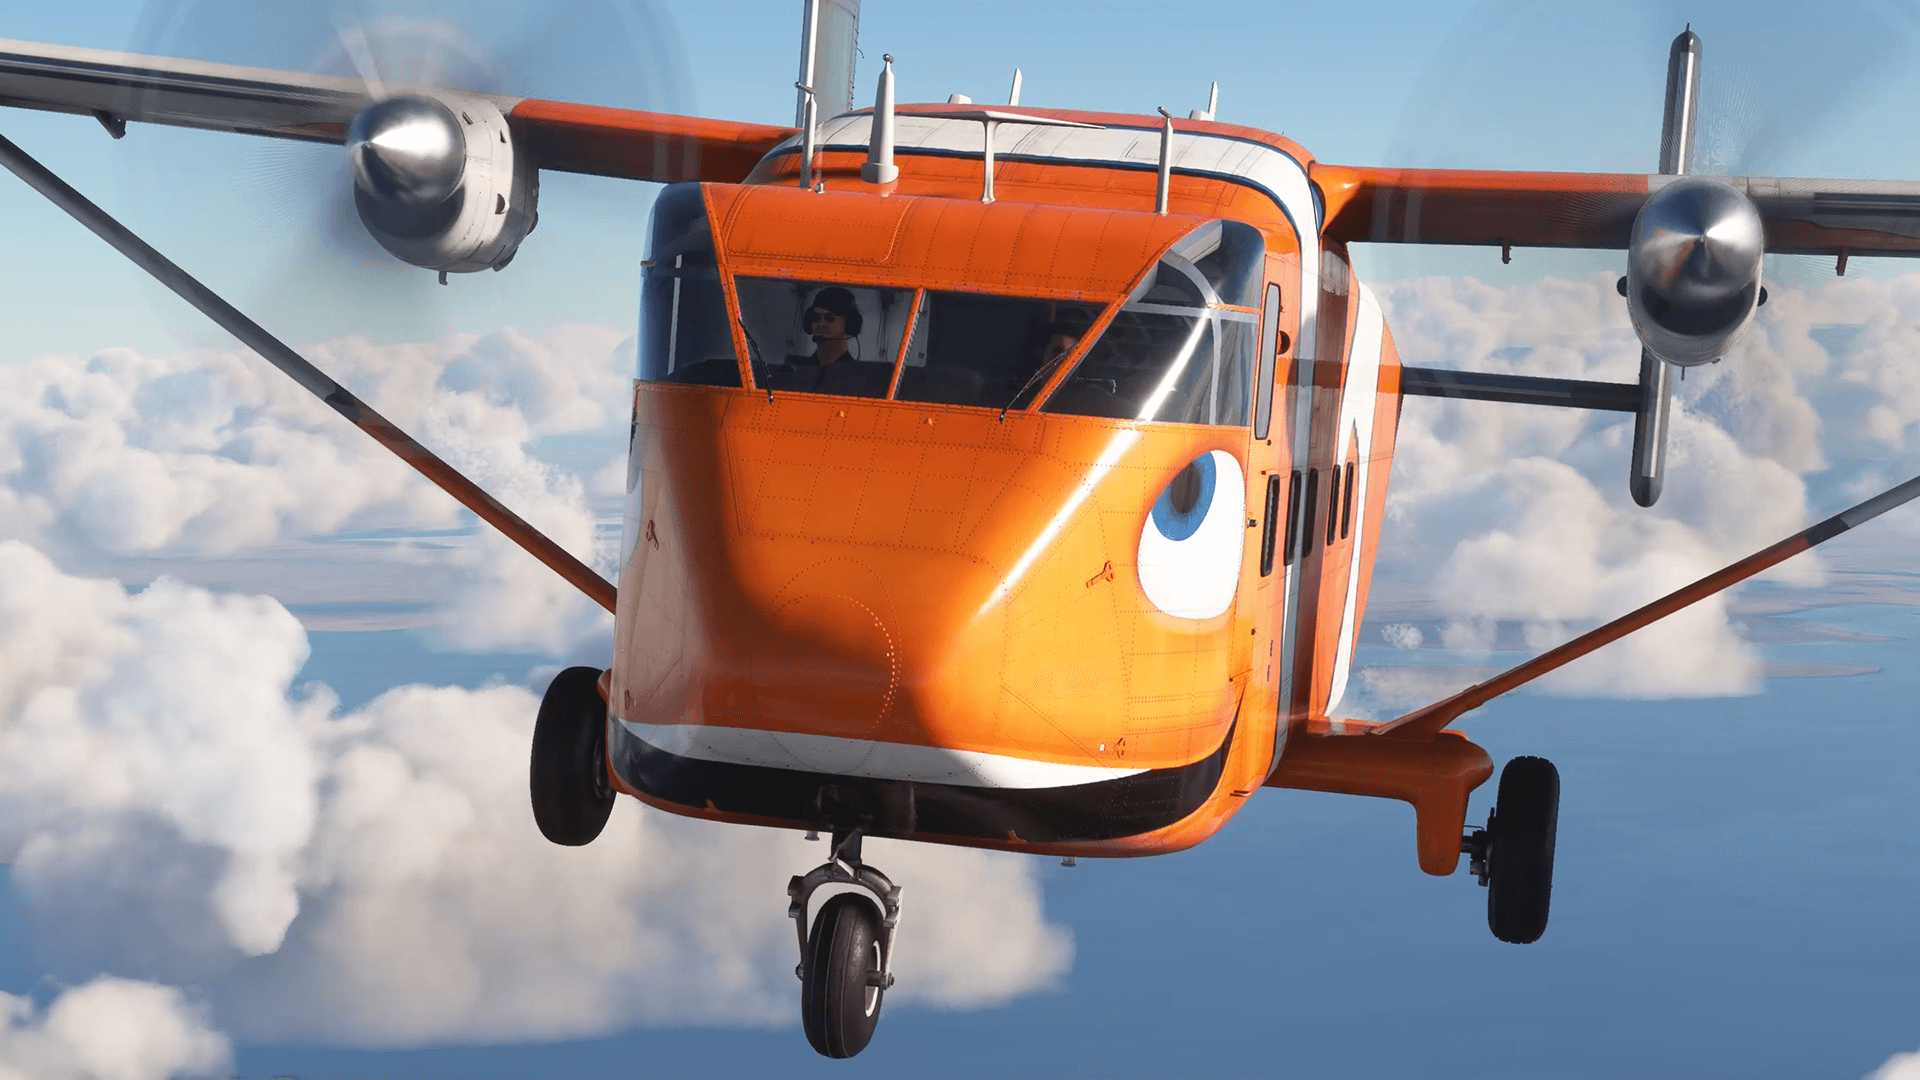 Microsoft Flight Simulator Releases Local Legend 16: The Short SC.7 Skyvan